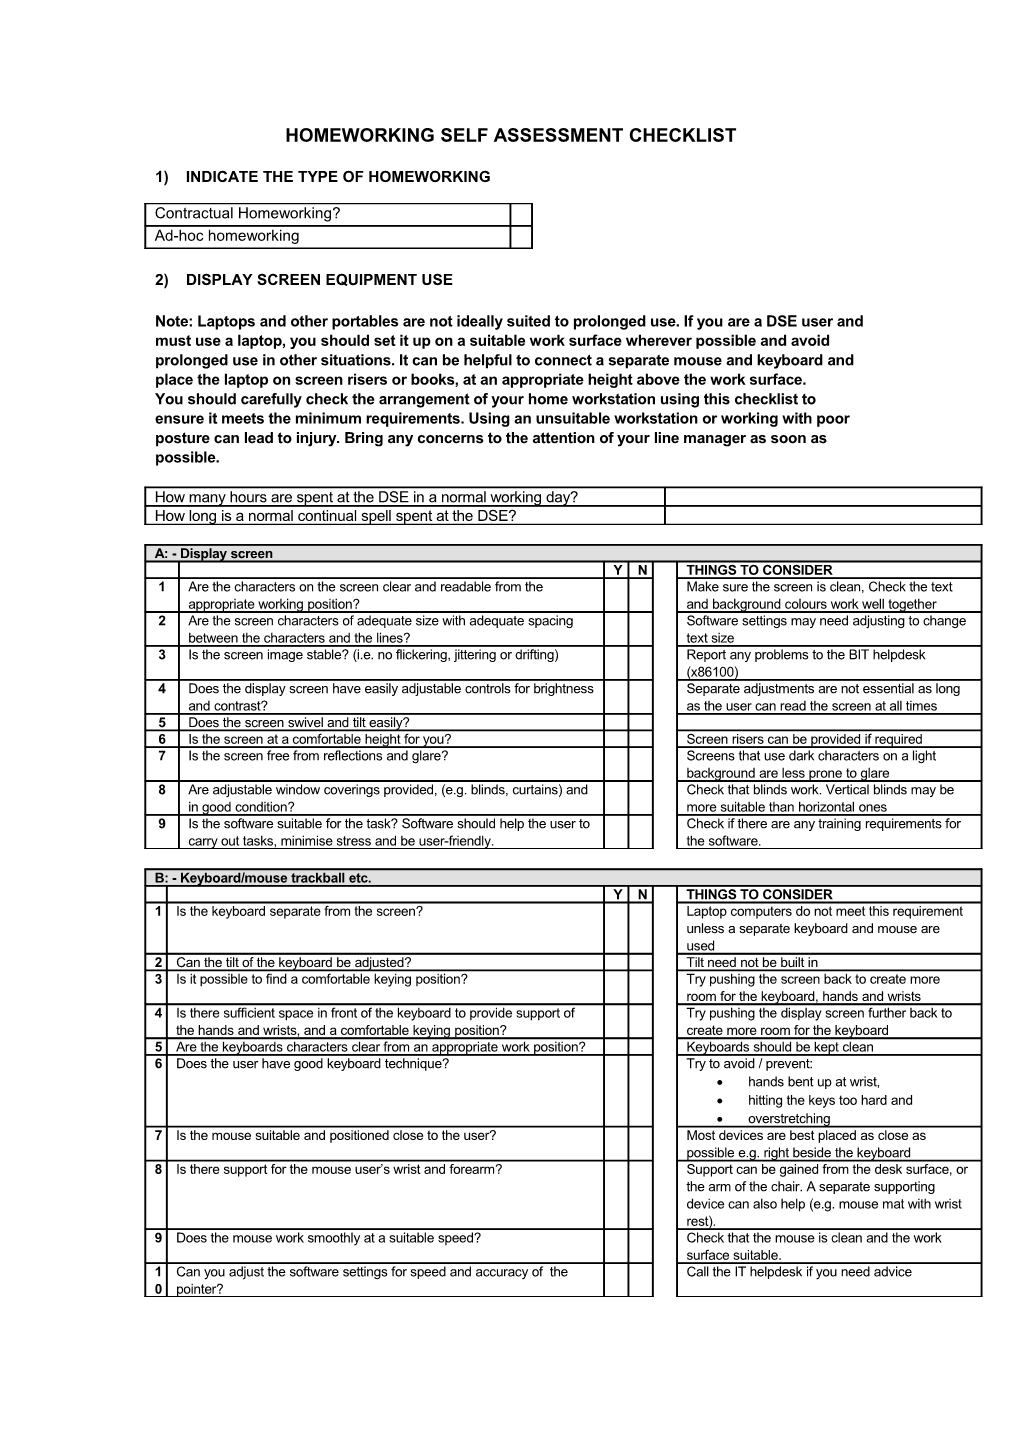 Homeworking Self Assessment Checklist